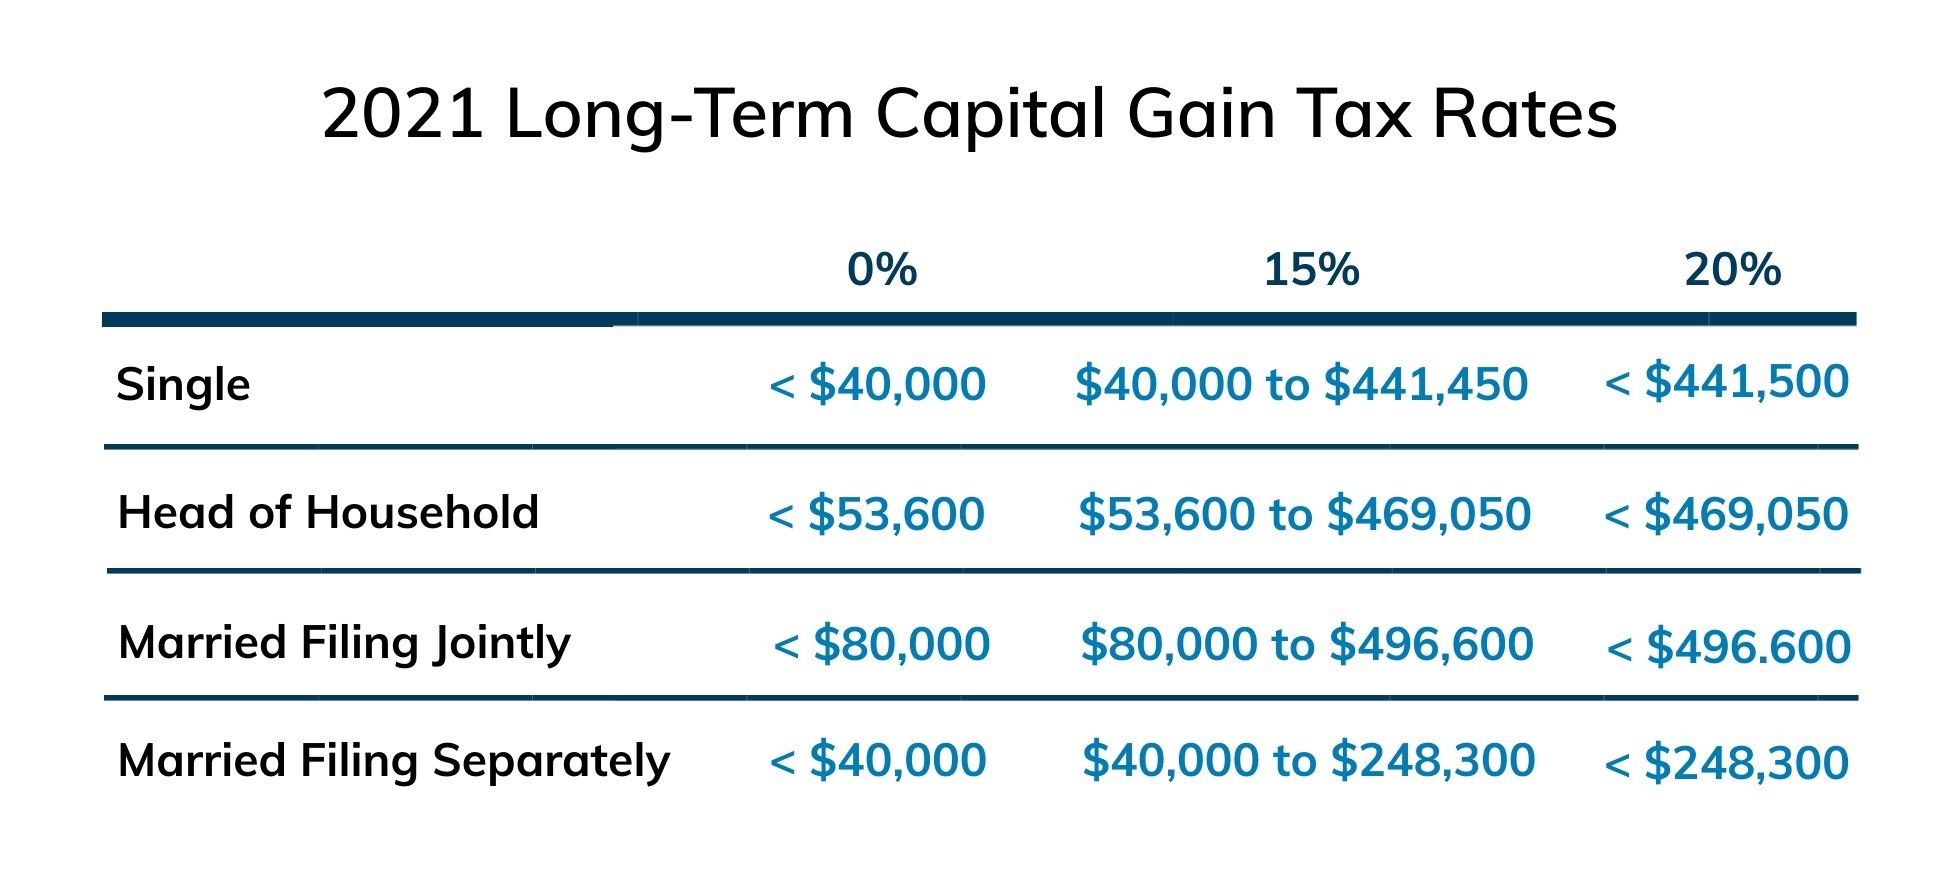 2021 capital gains tax rates
